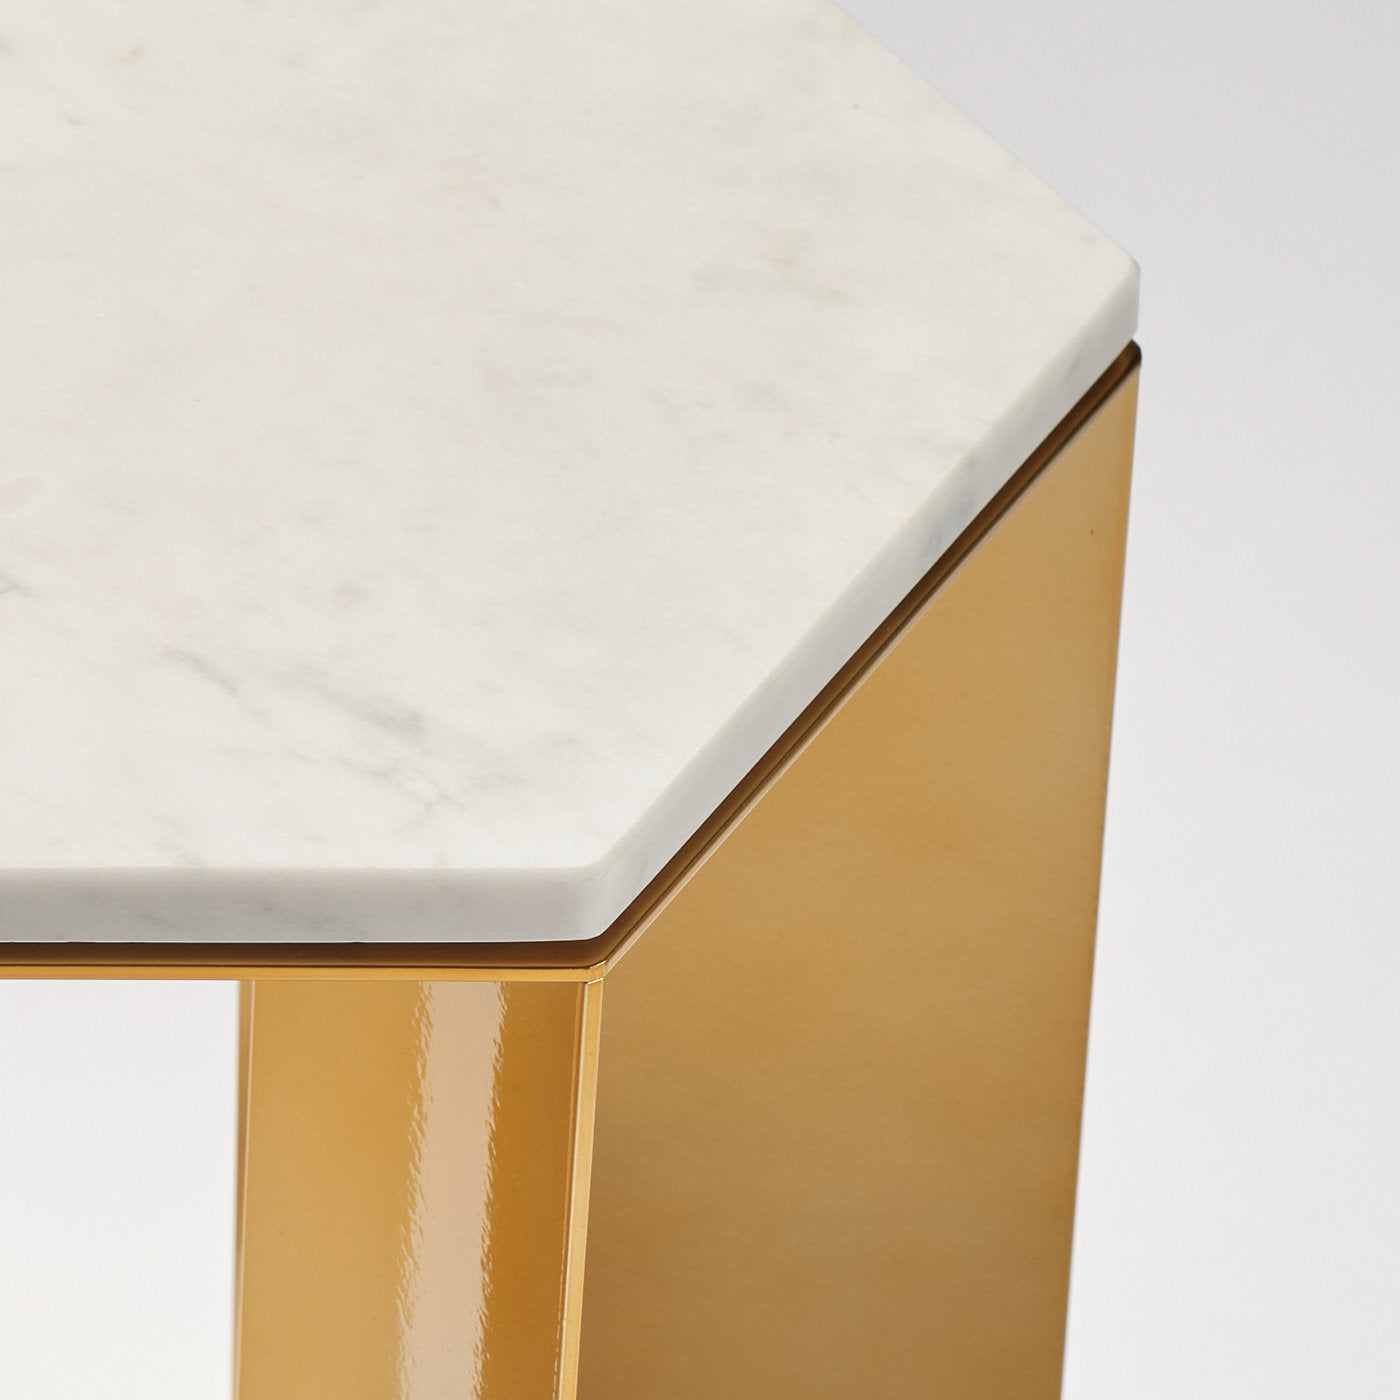 Alato Gold and White Marble Side Table by Antonio Saporito - Alternative view 1